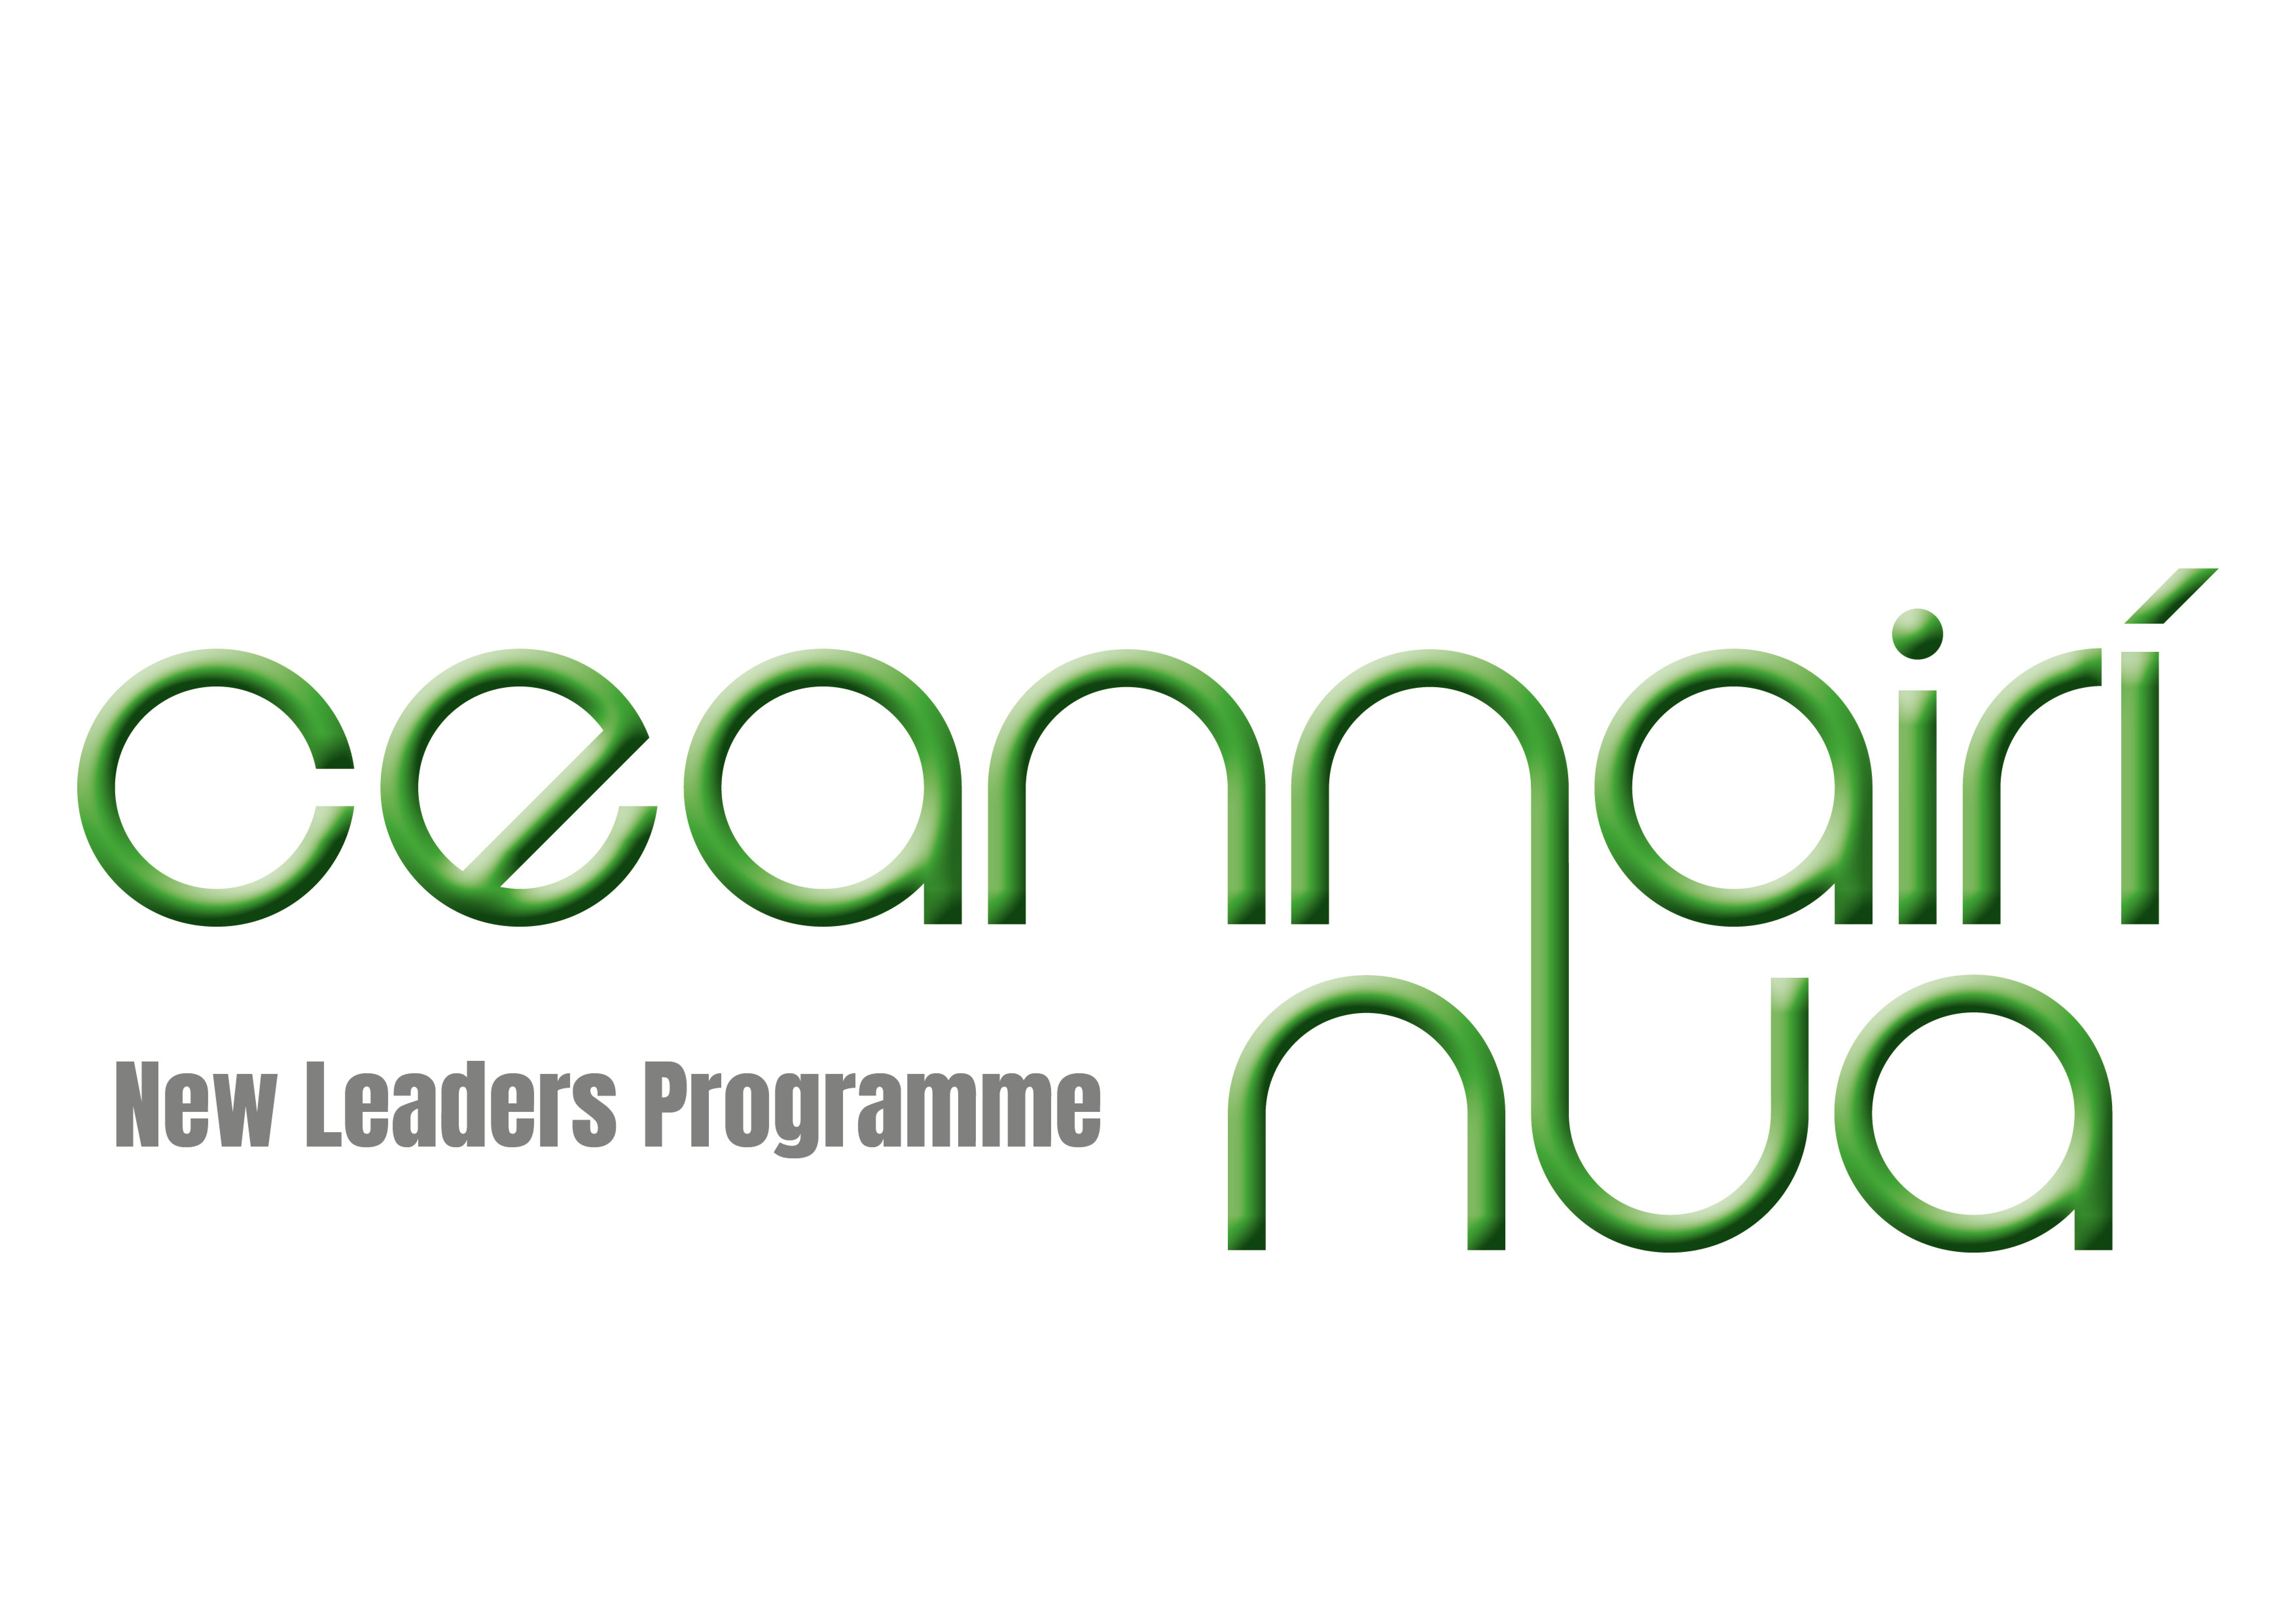 New leaders programme logo